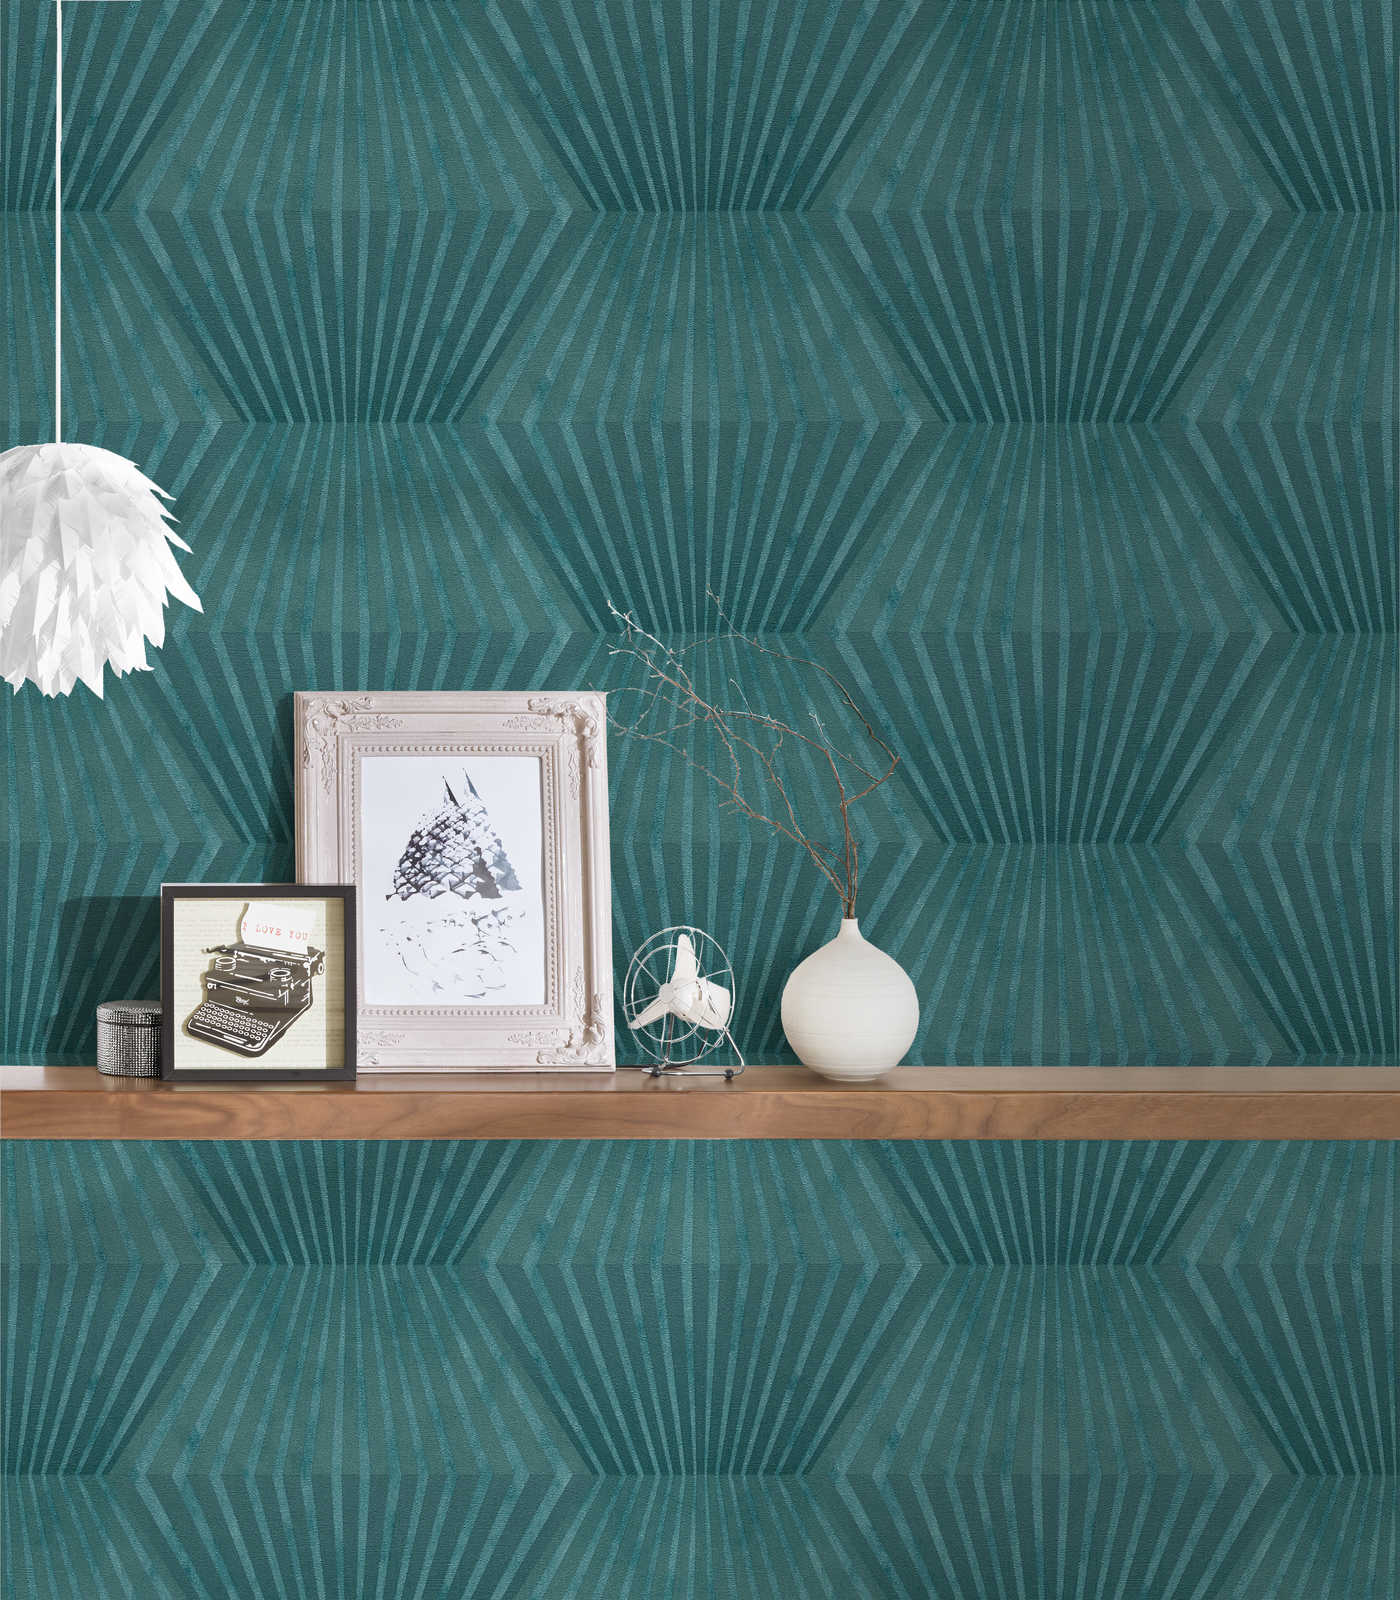             Art deco wallpaper with line pattern & metallic whole - Green
        